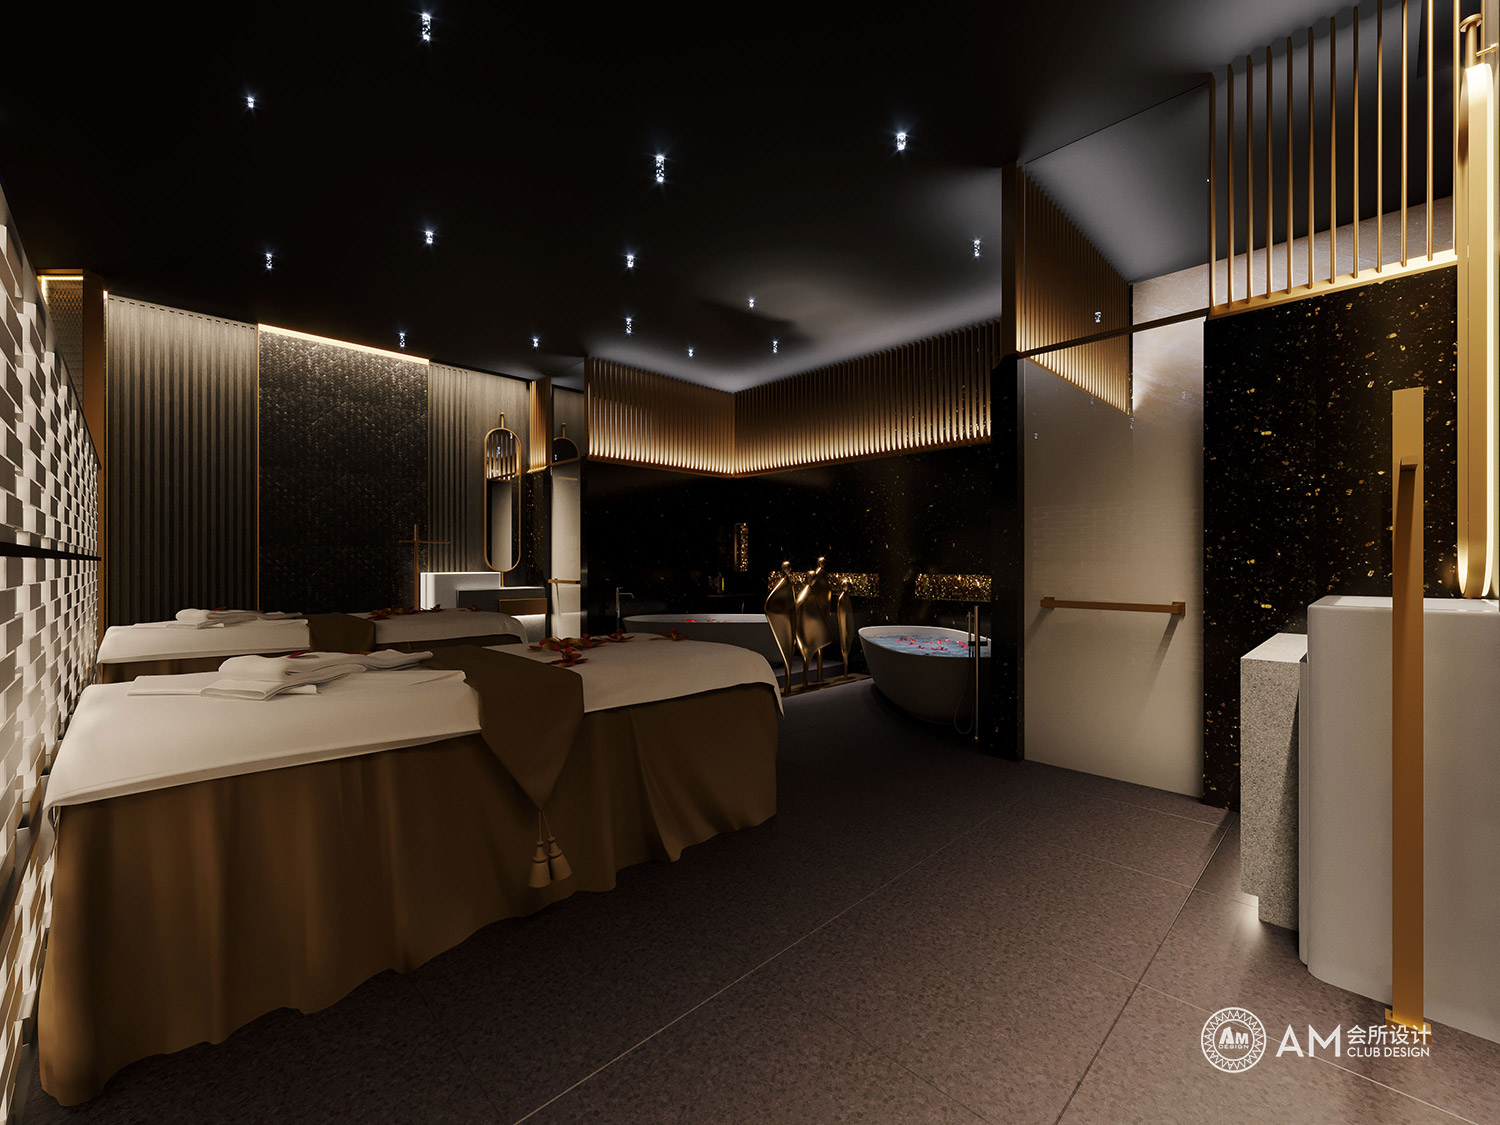 AM DESIGN | Spa room design of hanyuegong Spa Club